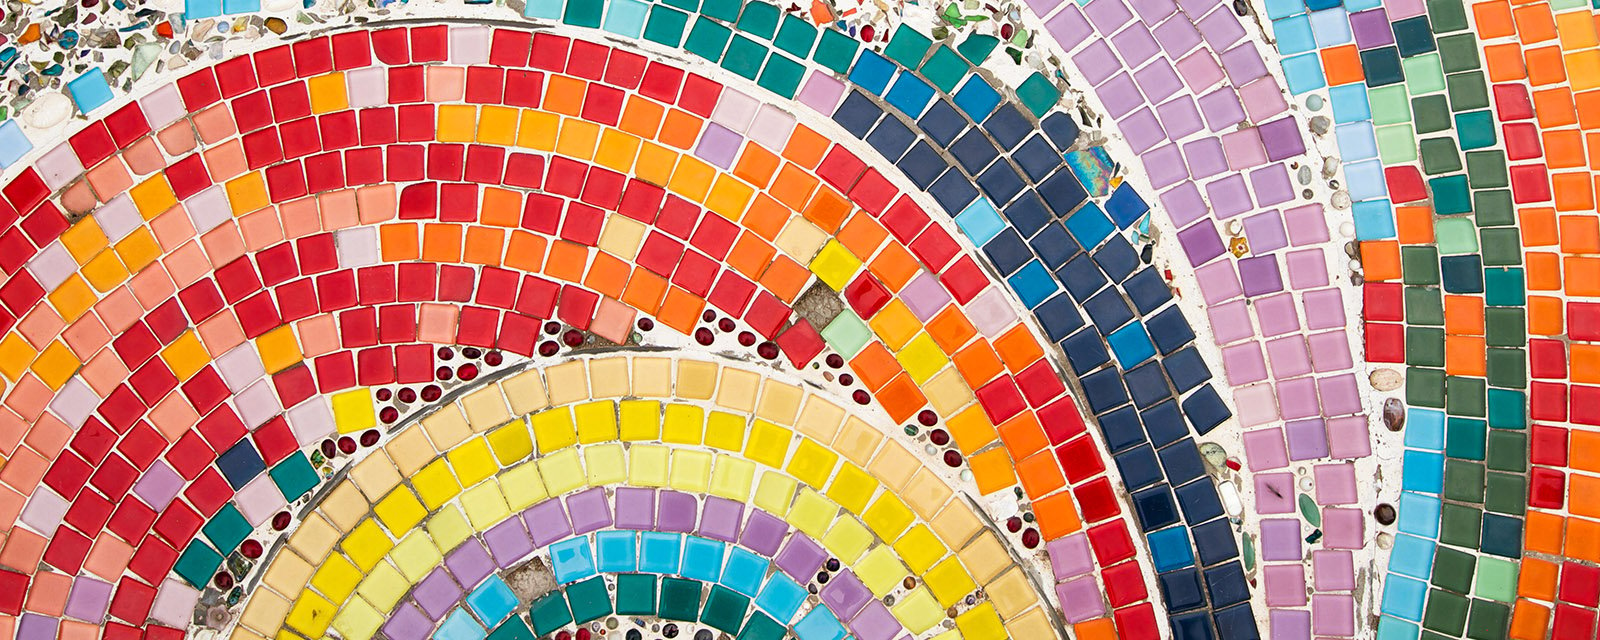 Multicolored tiles in a circular shape